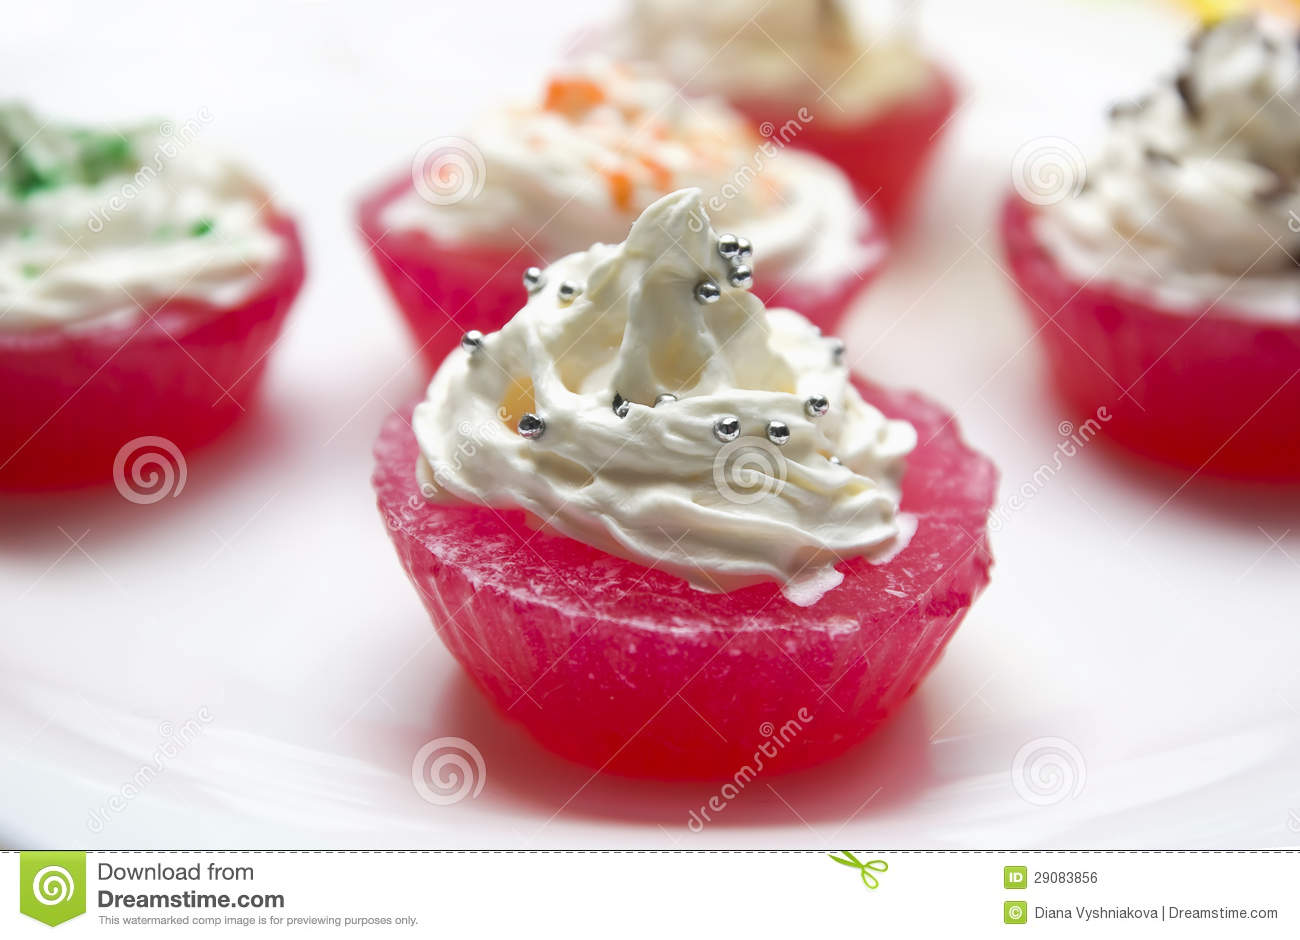 Jello Shot Cupcakes Royalty Free Stock Image   Image  29083856